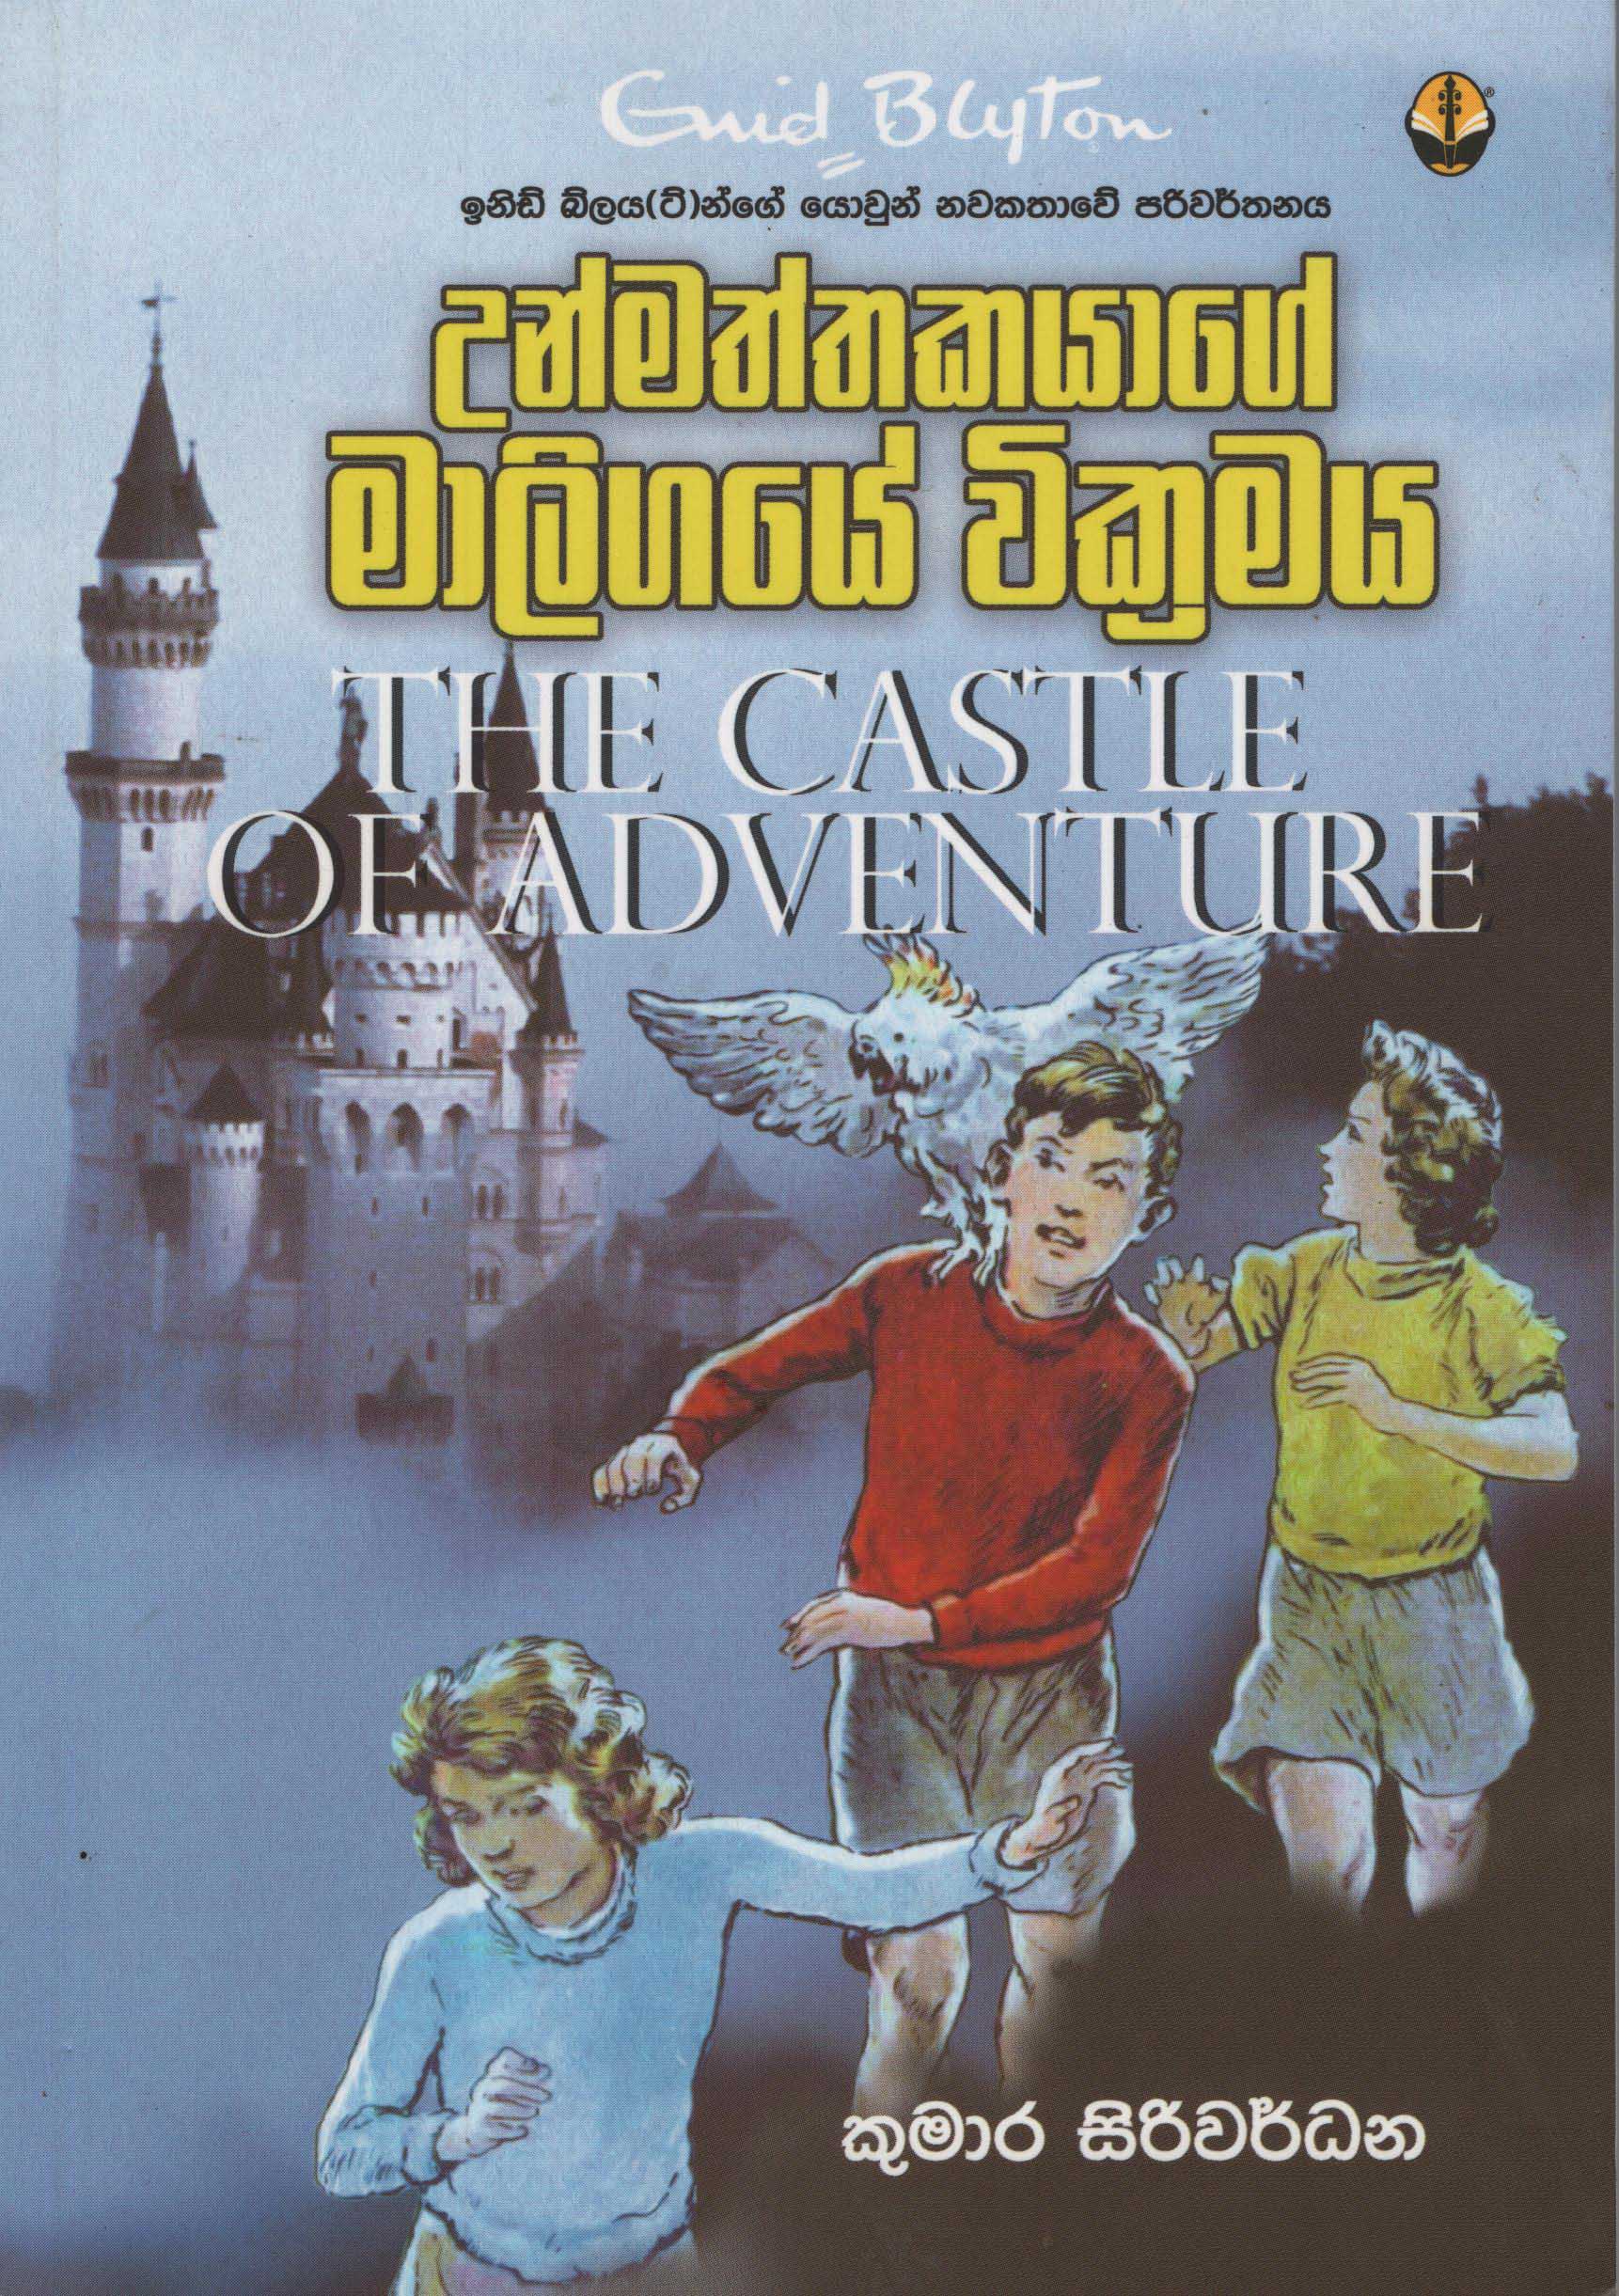 Unmaththakayage Maligaye Vikramaya Translation of The Castle of Adventure By Enid Blyton